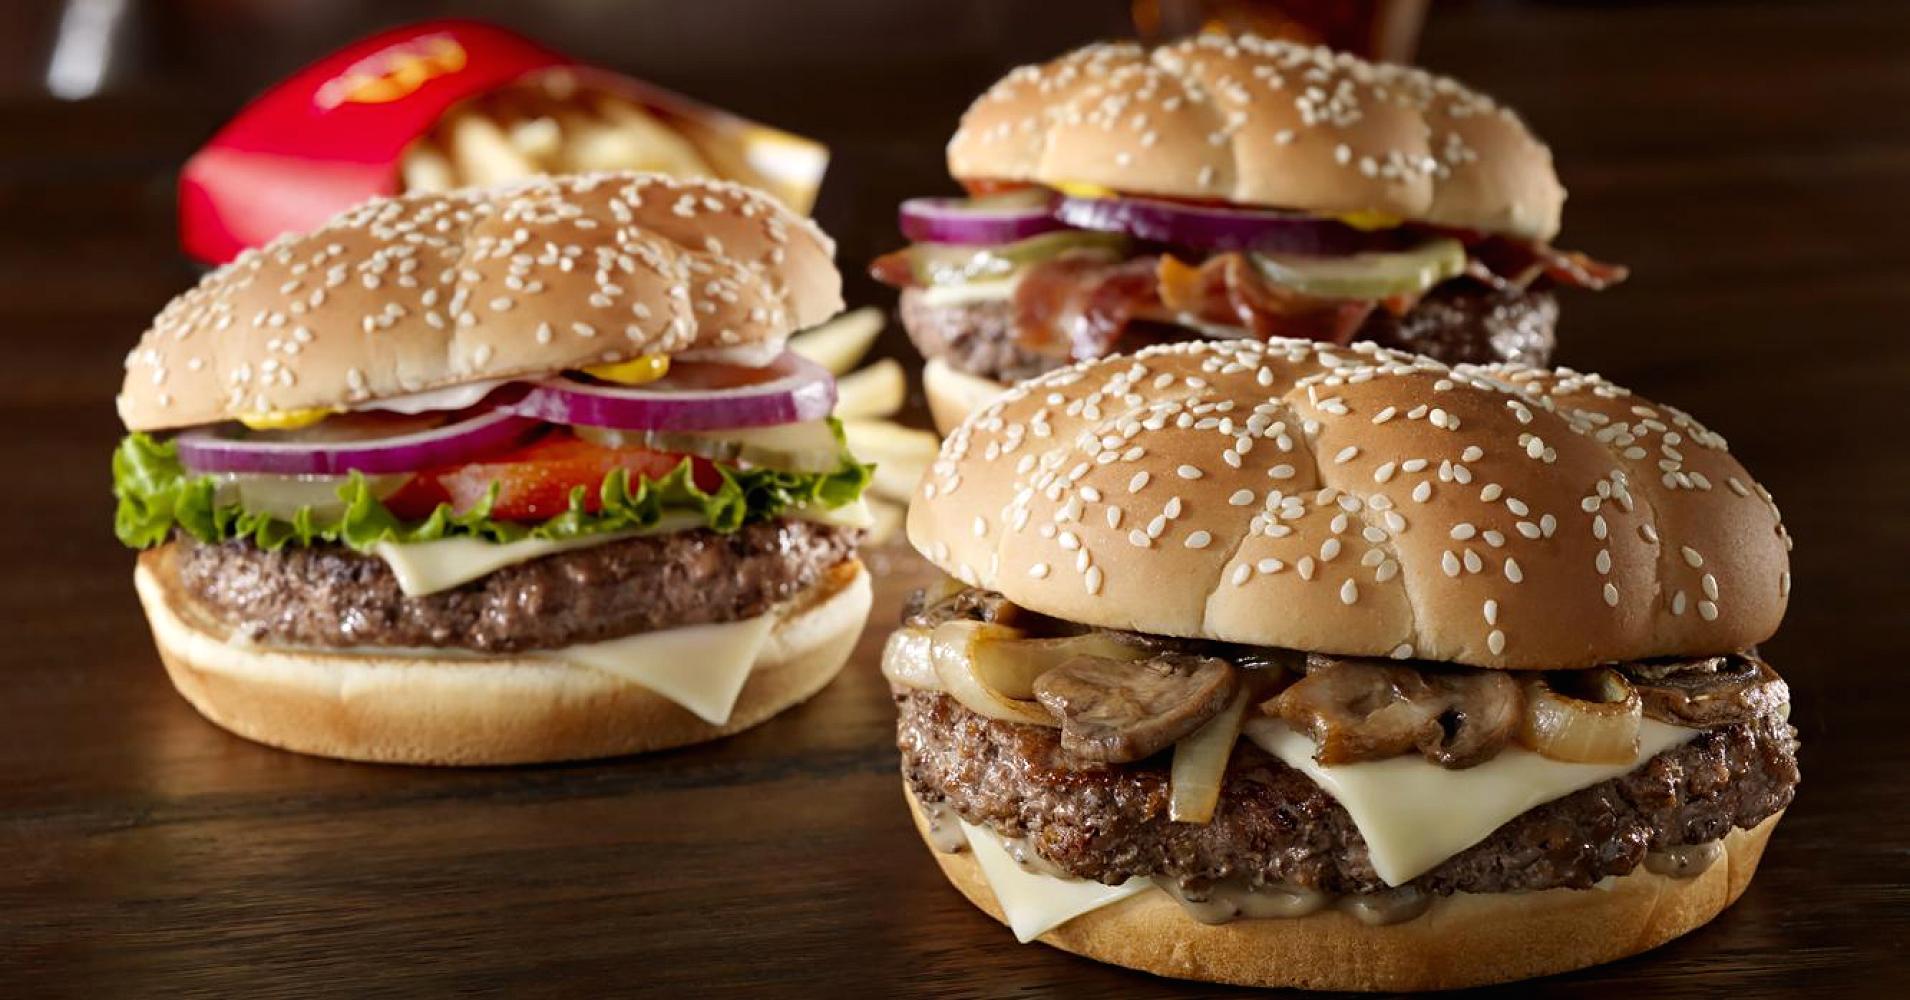 Meat from fast food restaurants' hamburgers